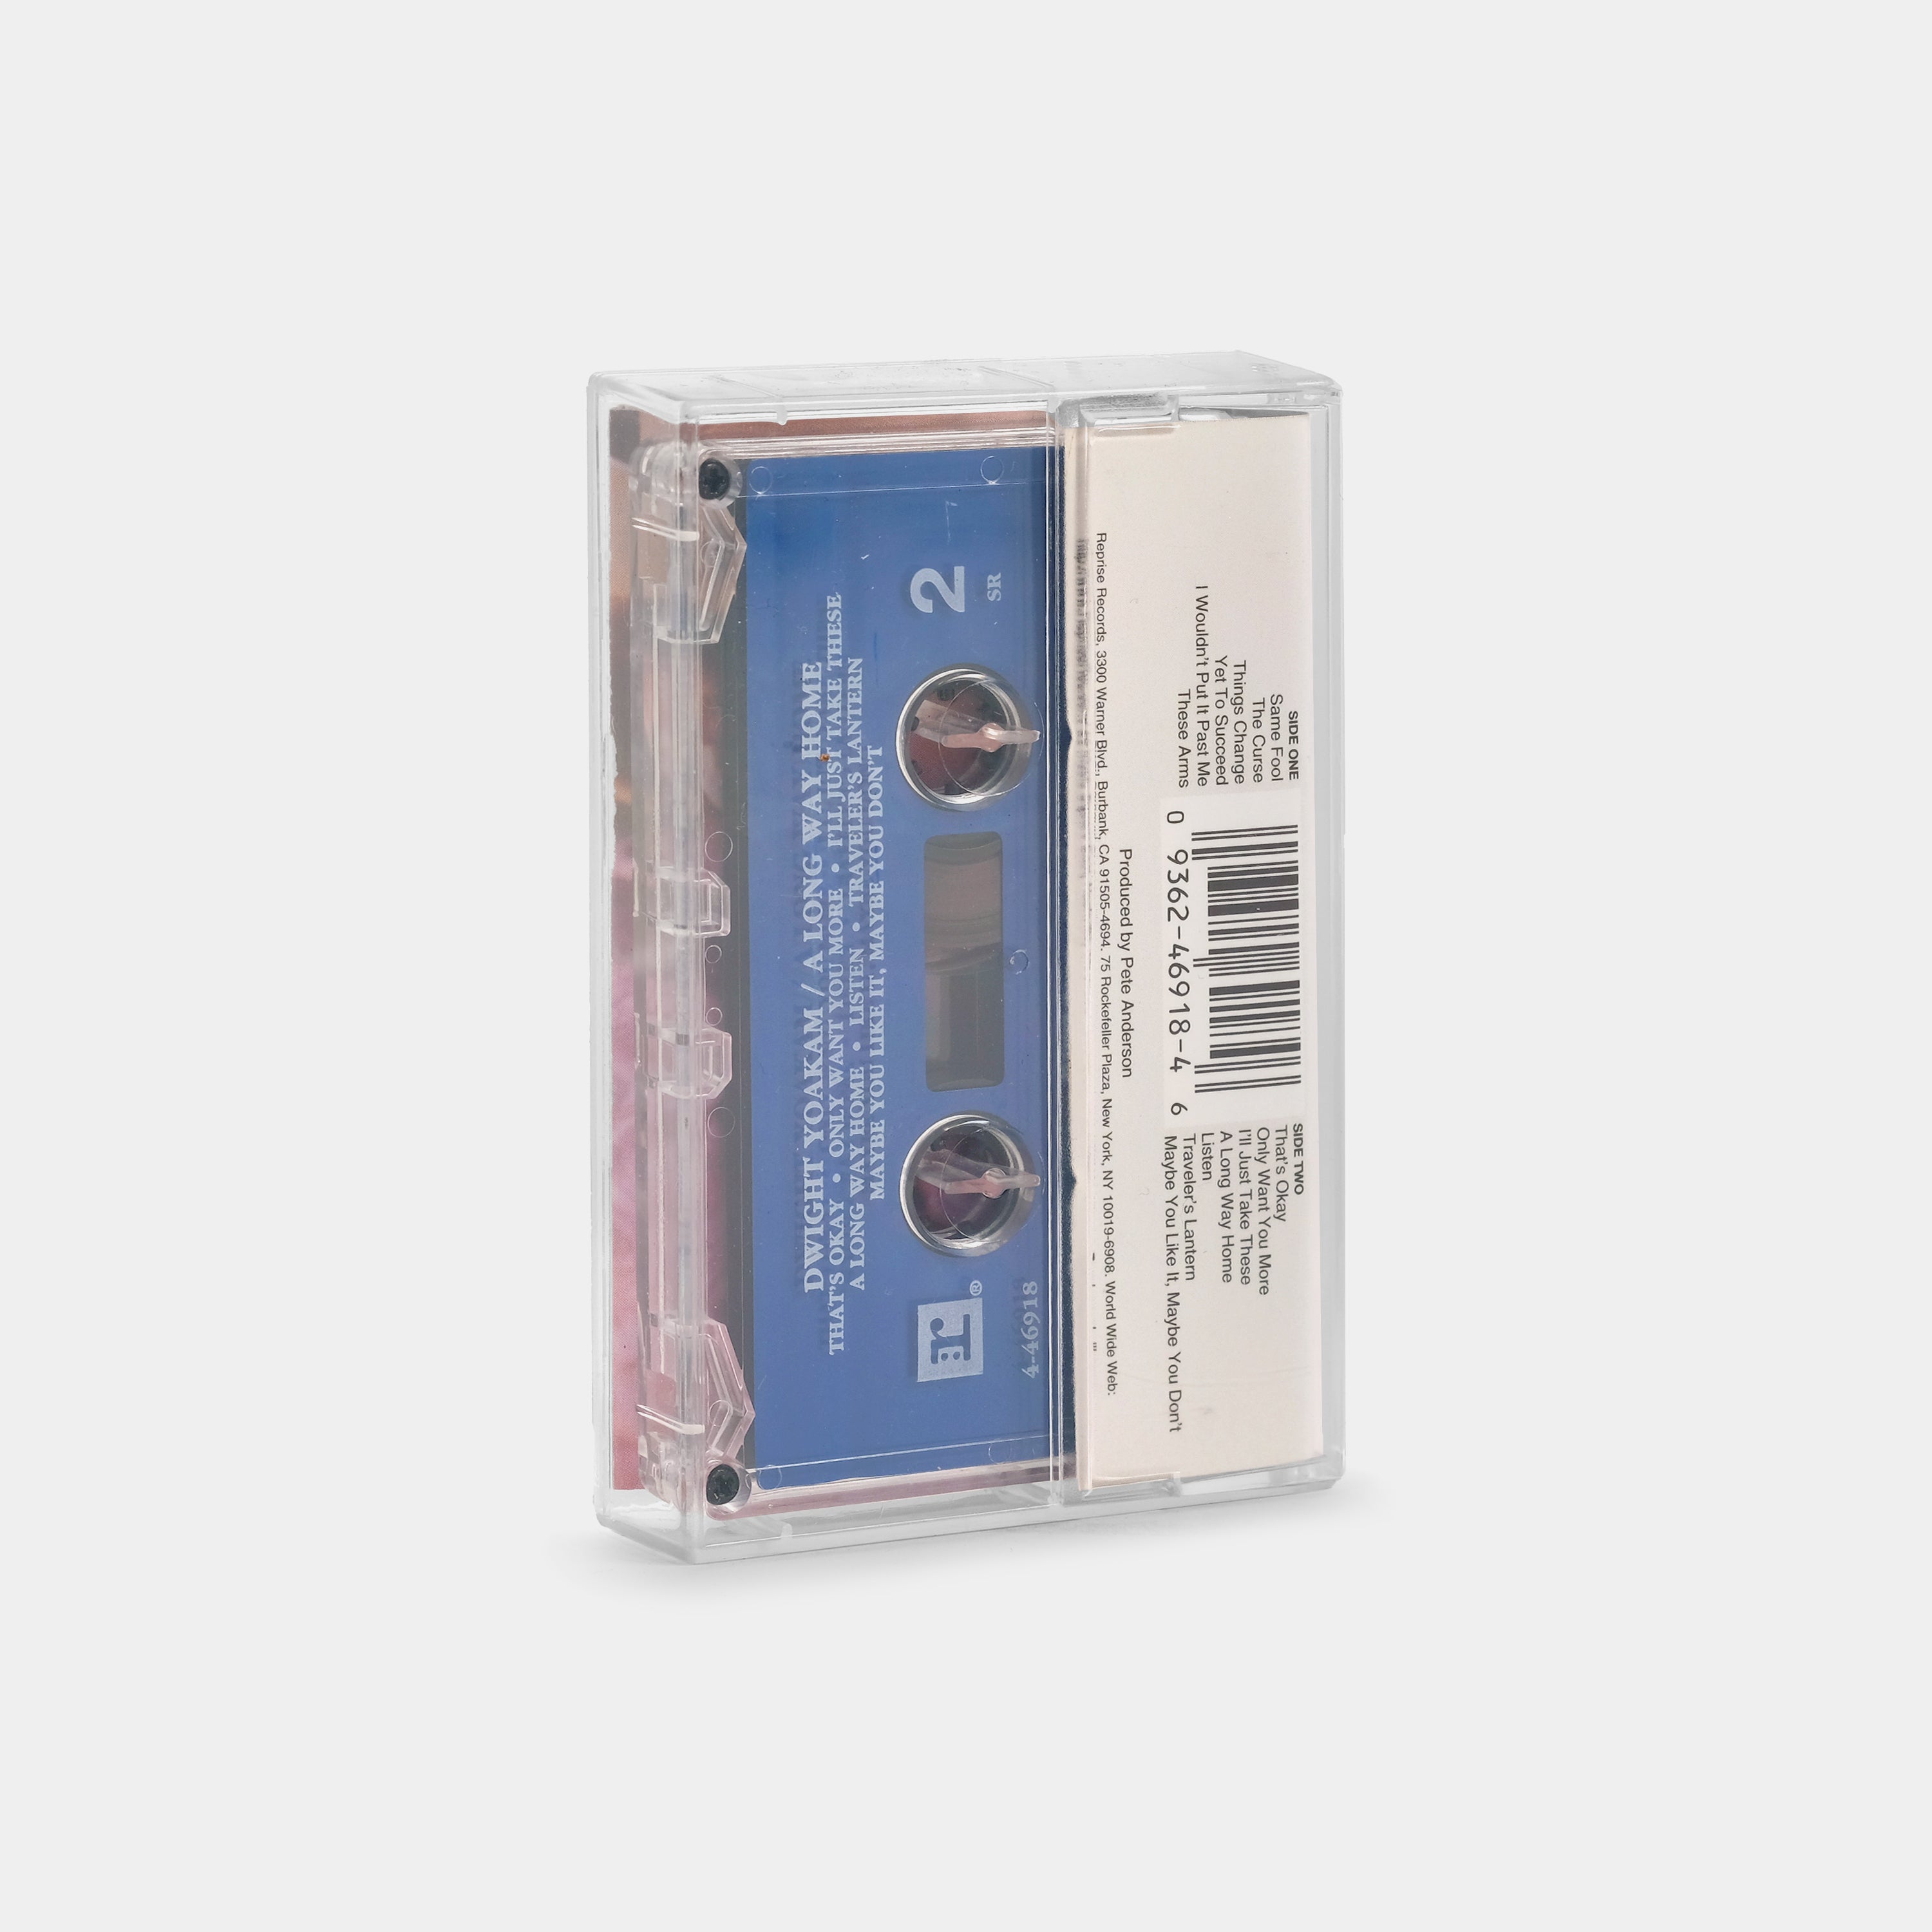 Dwight Yoakam - A Long Way Home Cassette Tape